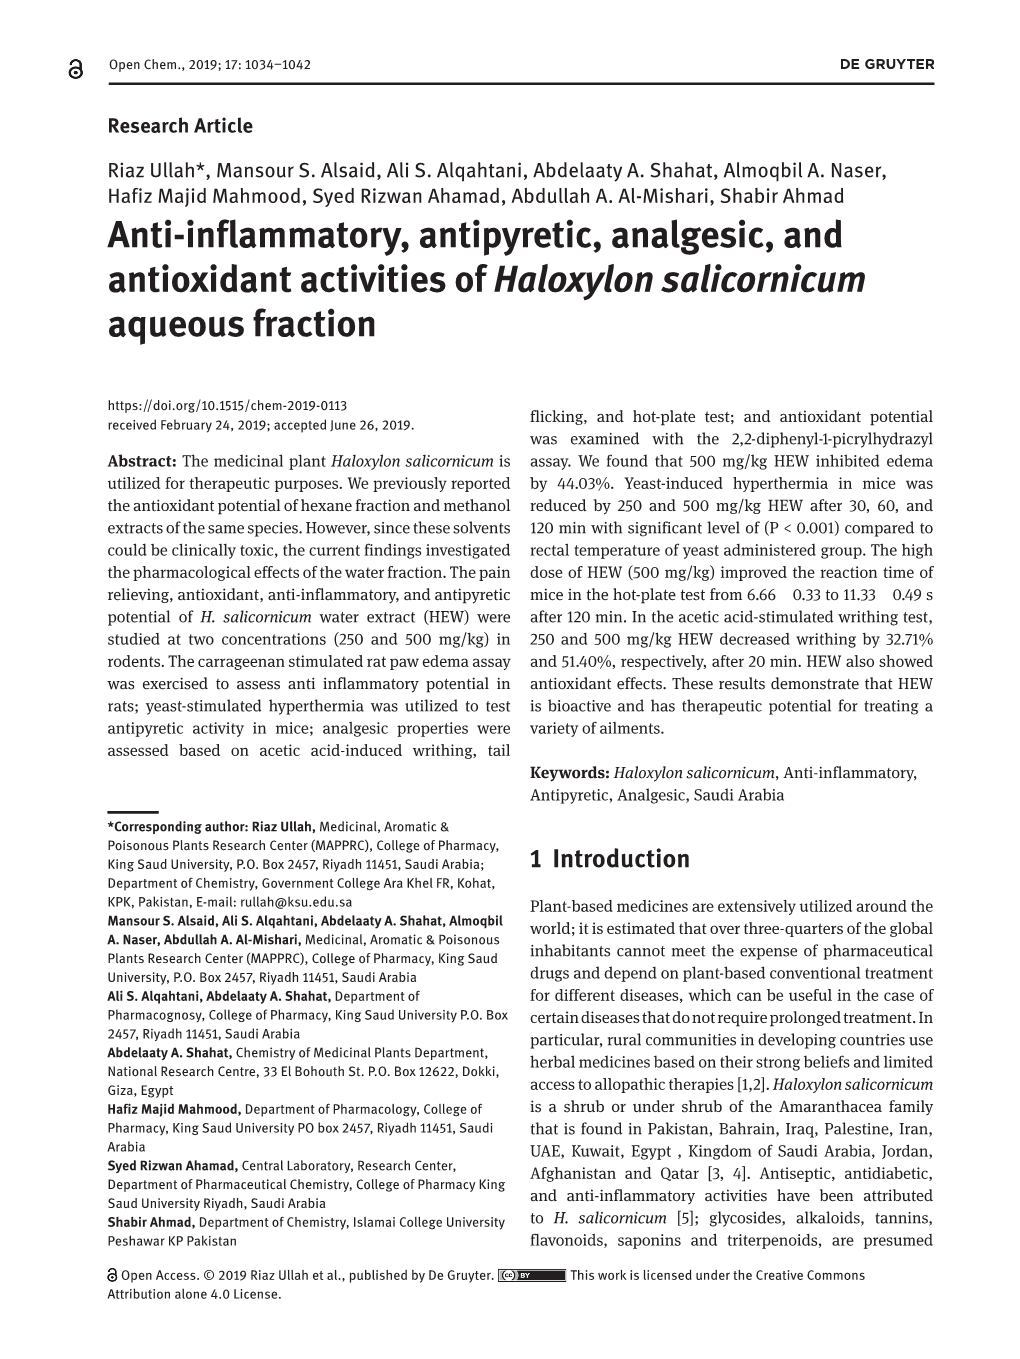 Anti-Inflammatory, Antipyretic, Analgesic, and Antioxidant Activities of Haloxylon Salicornicum Aqueous Fraction